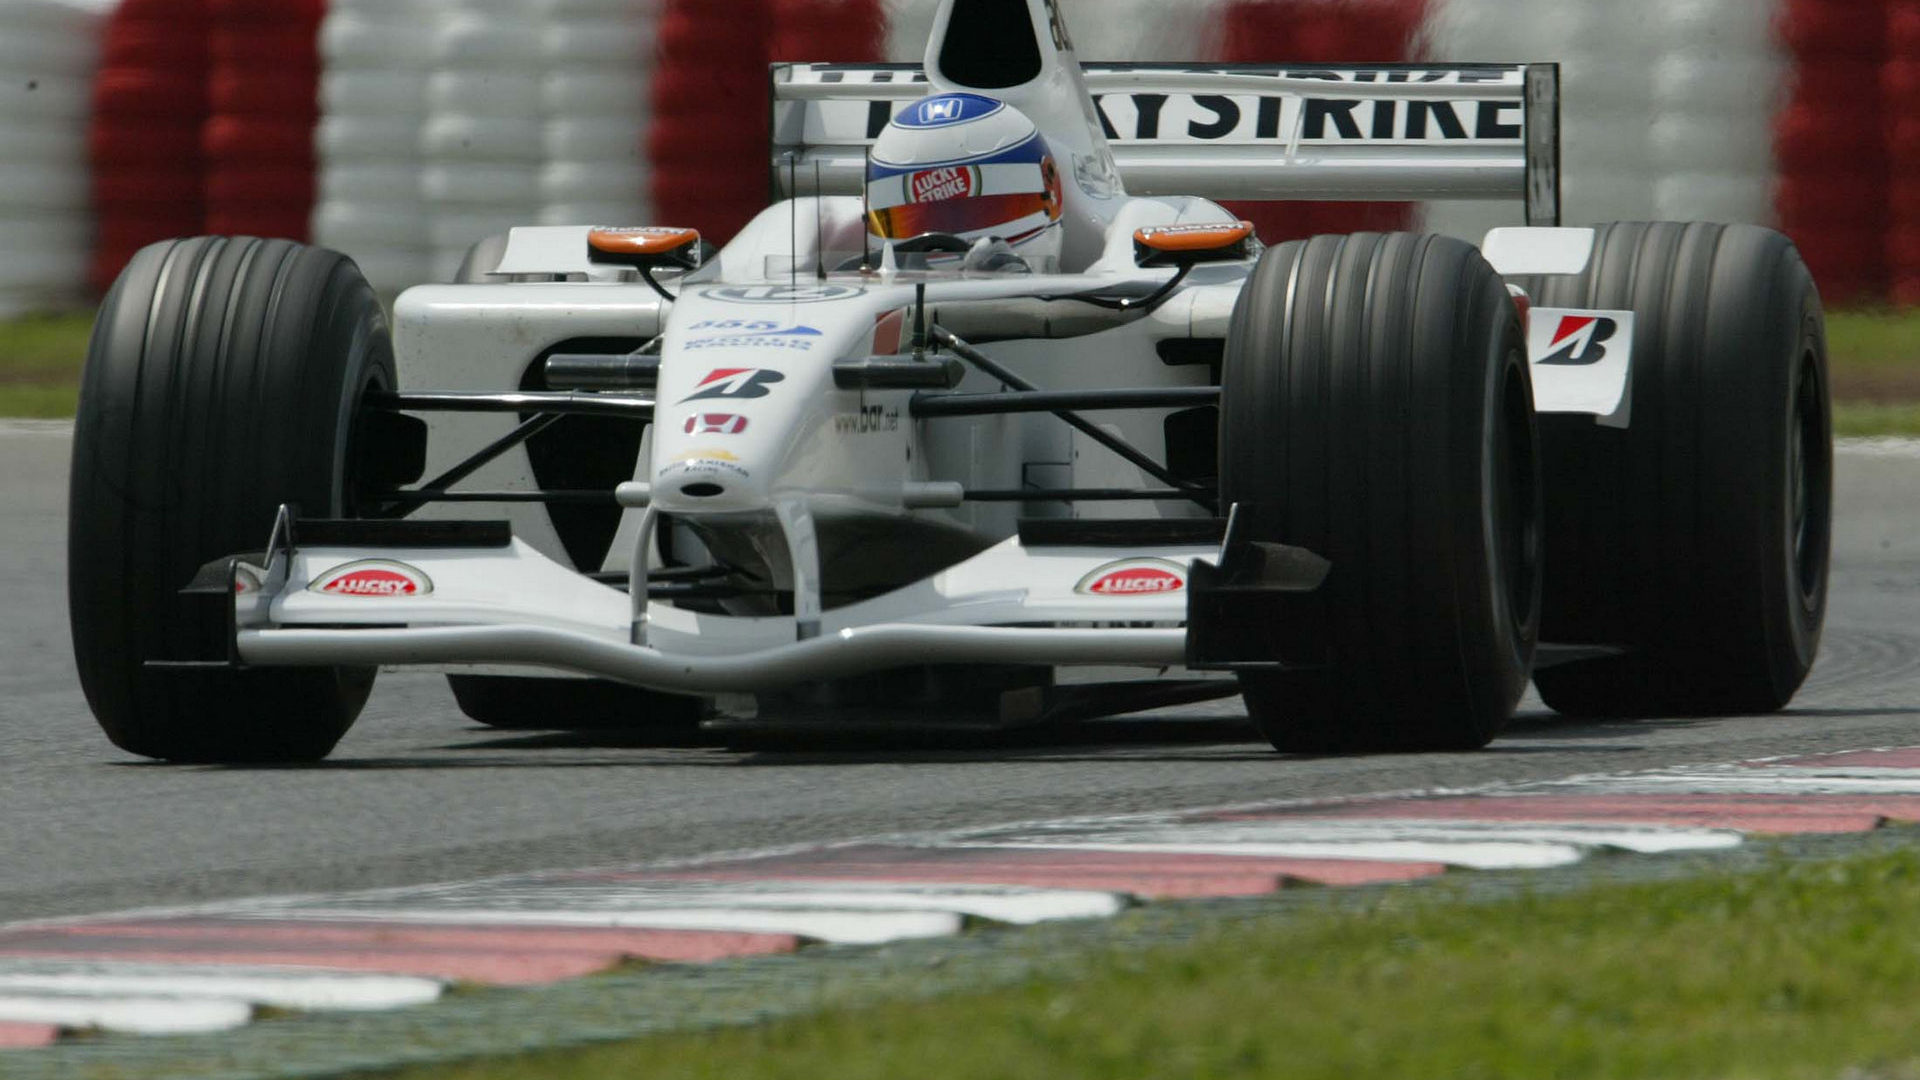 HD Wallpapers 2002 Formula 1 Grand Prix of Spain | F1 Fansite